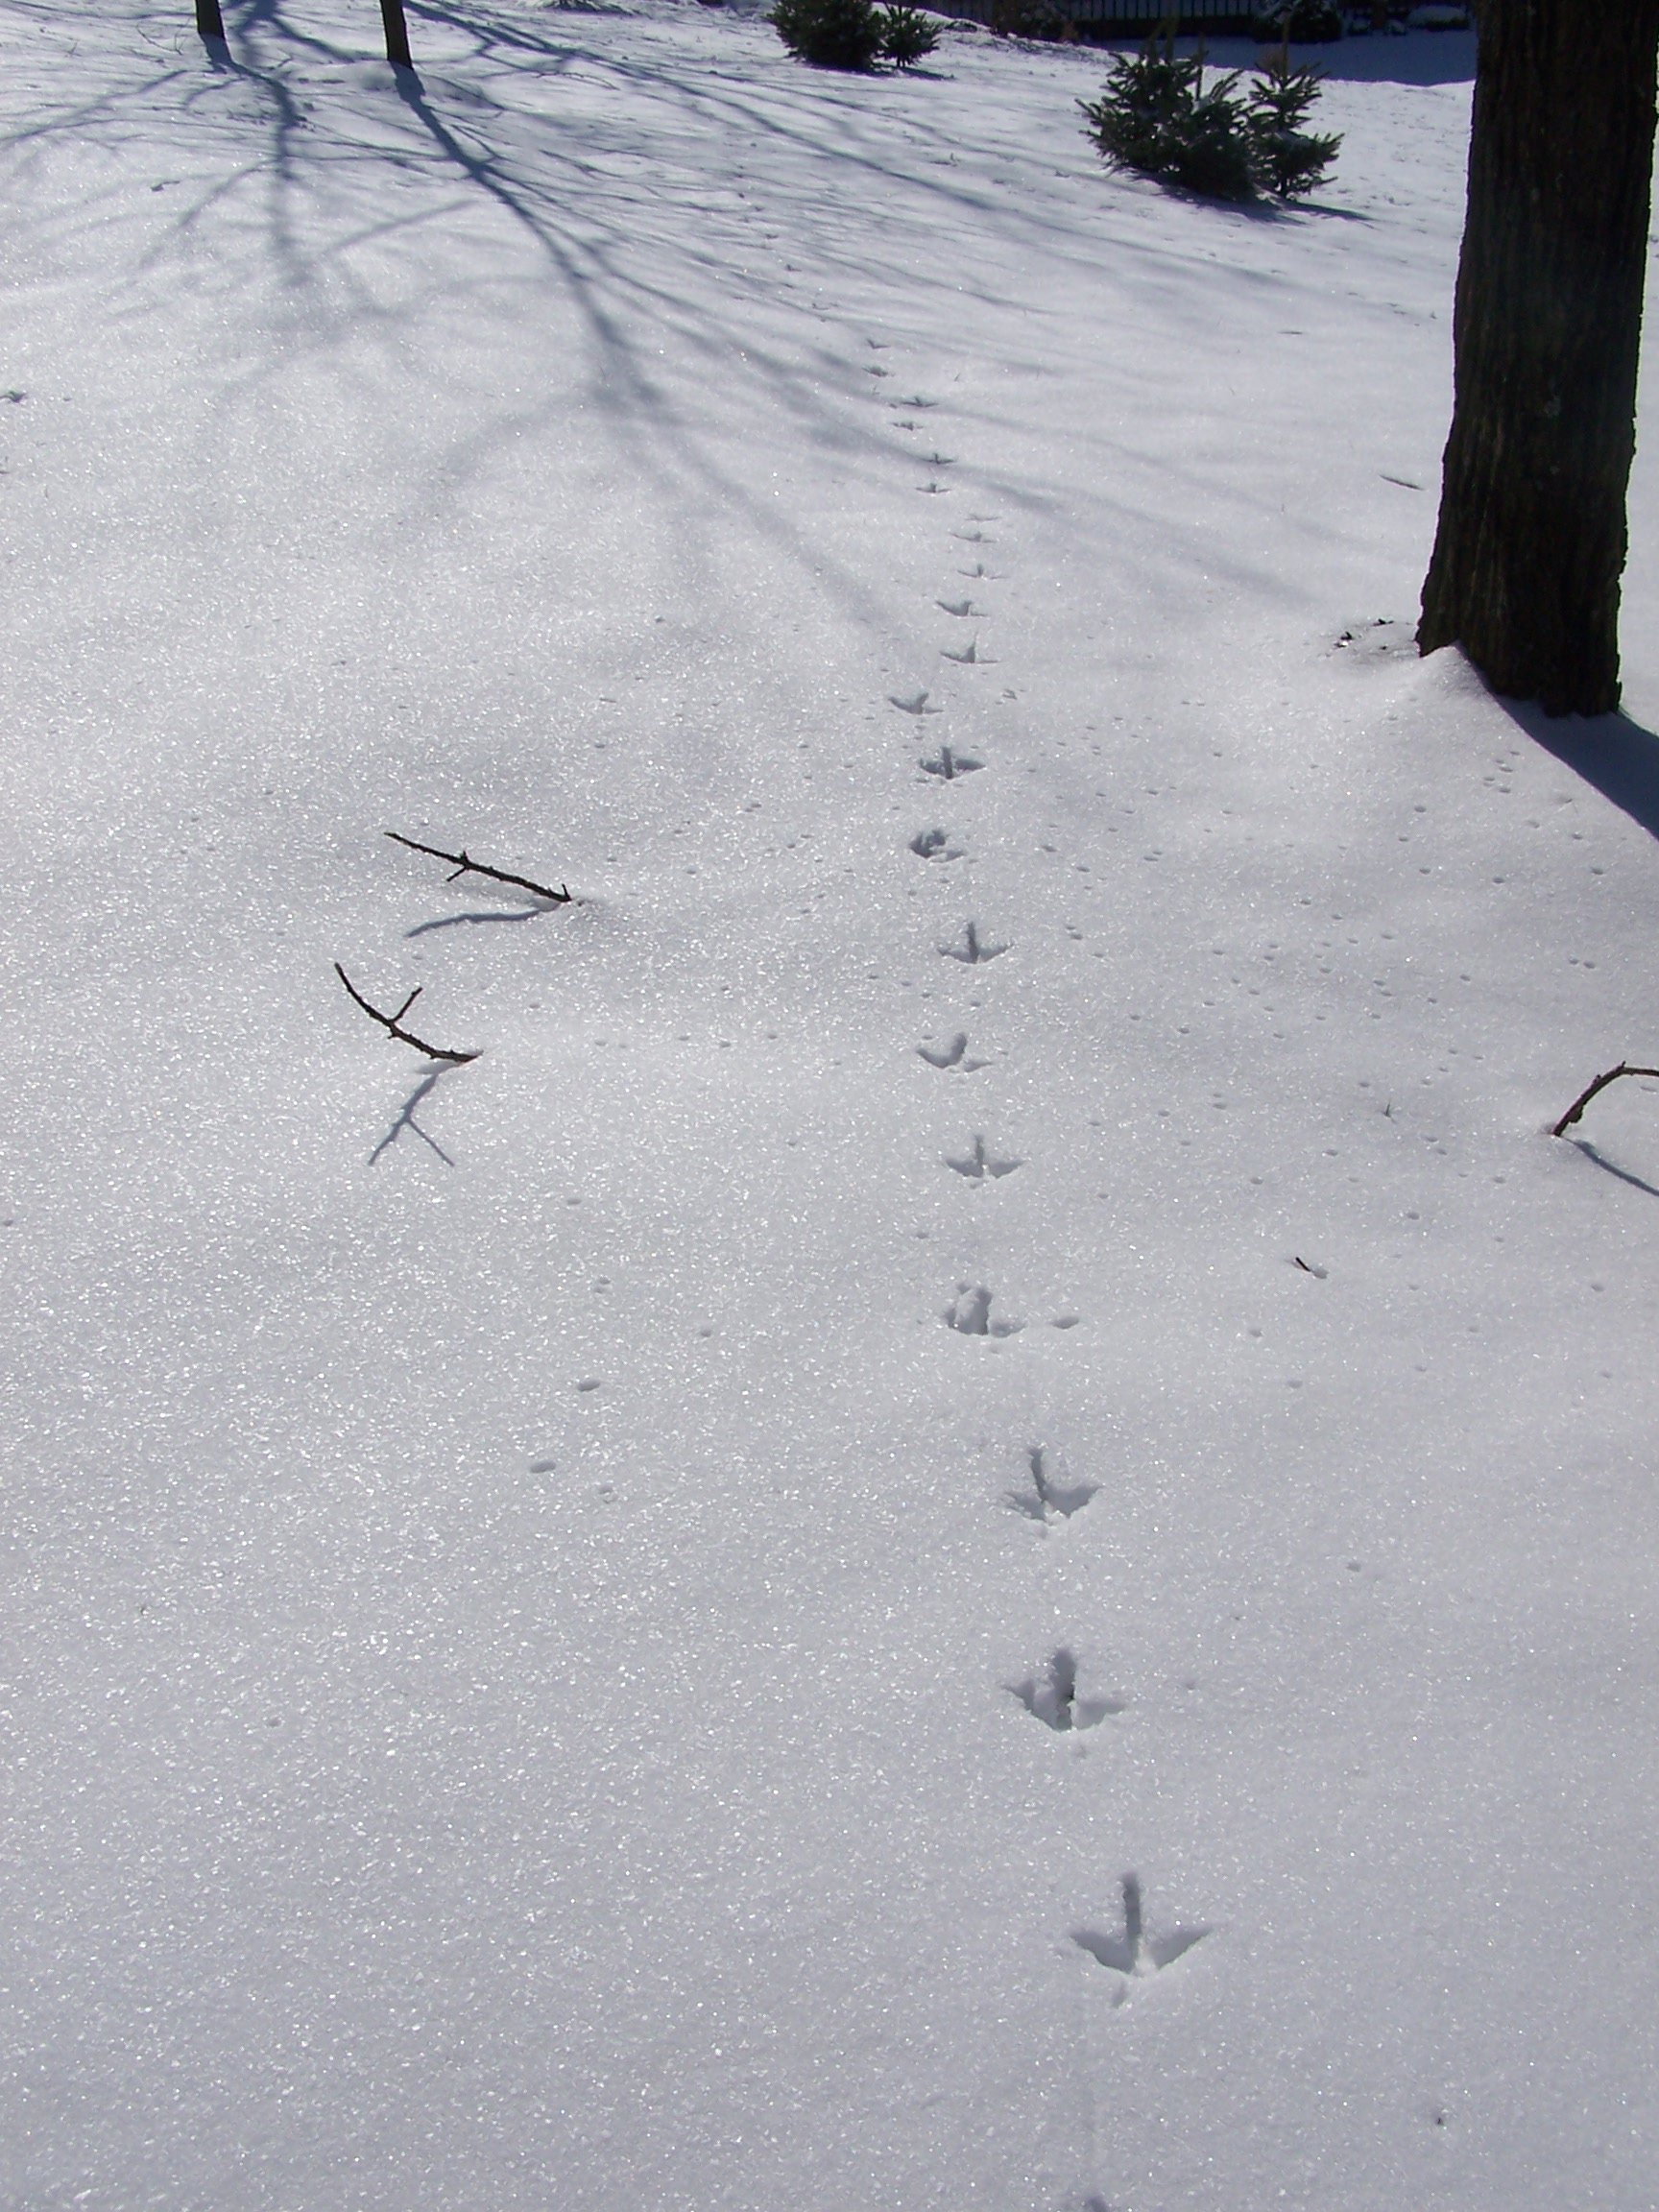 File:Turkey tracks in the snow.jpg - Wikimedia Commons